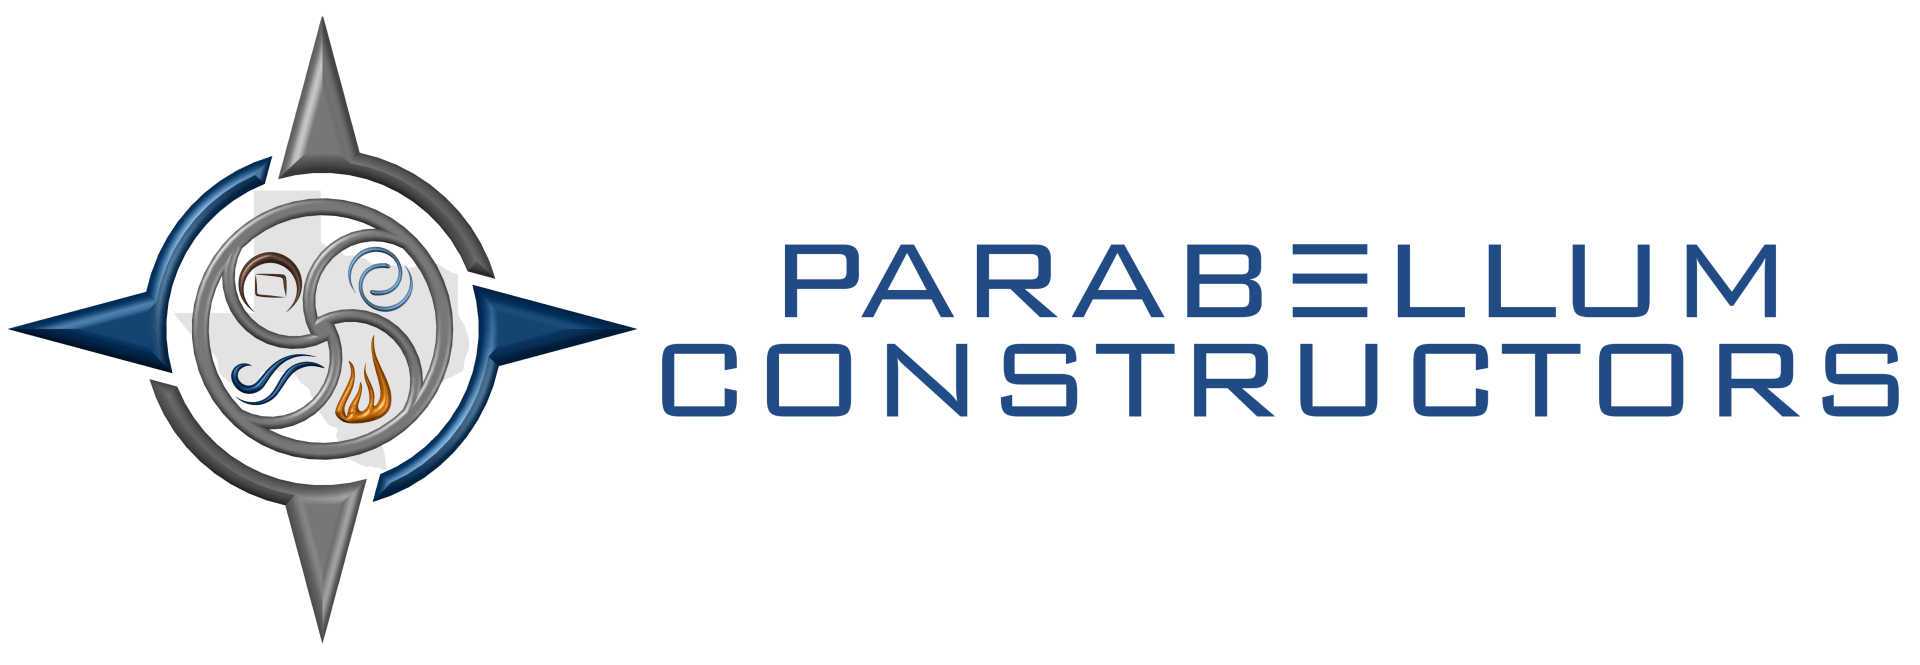 Parabellum Constructors